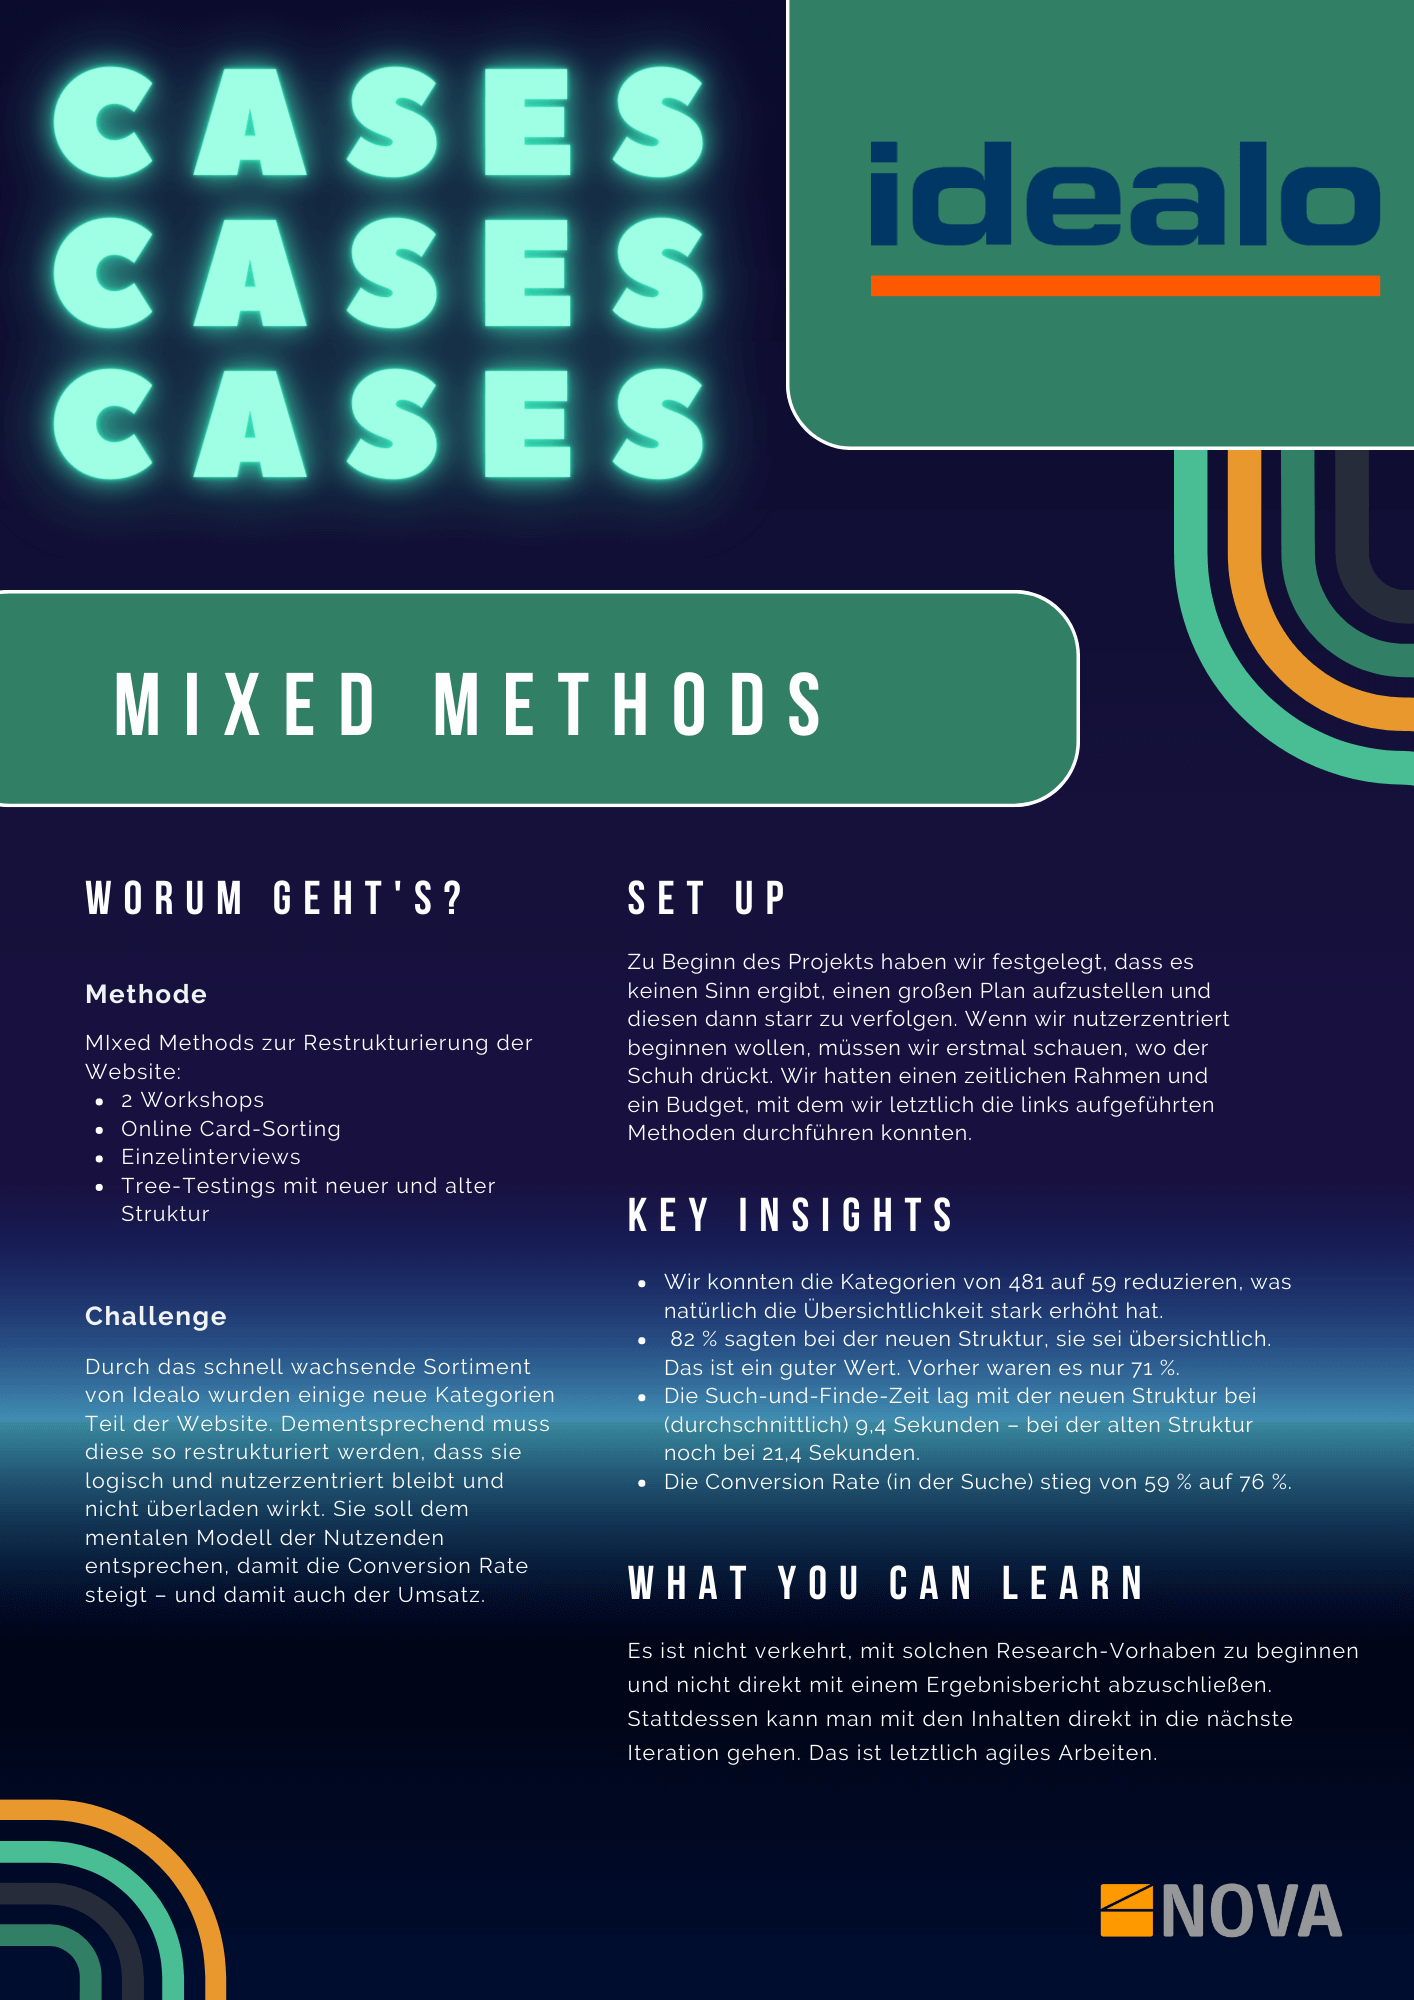 CASES CASES CASES (1)